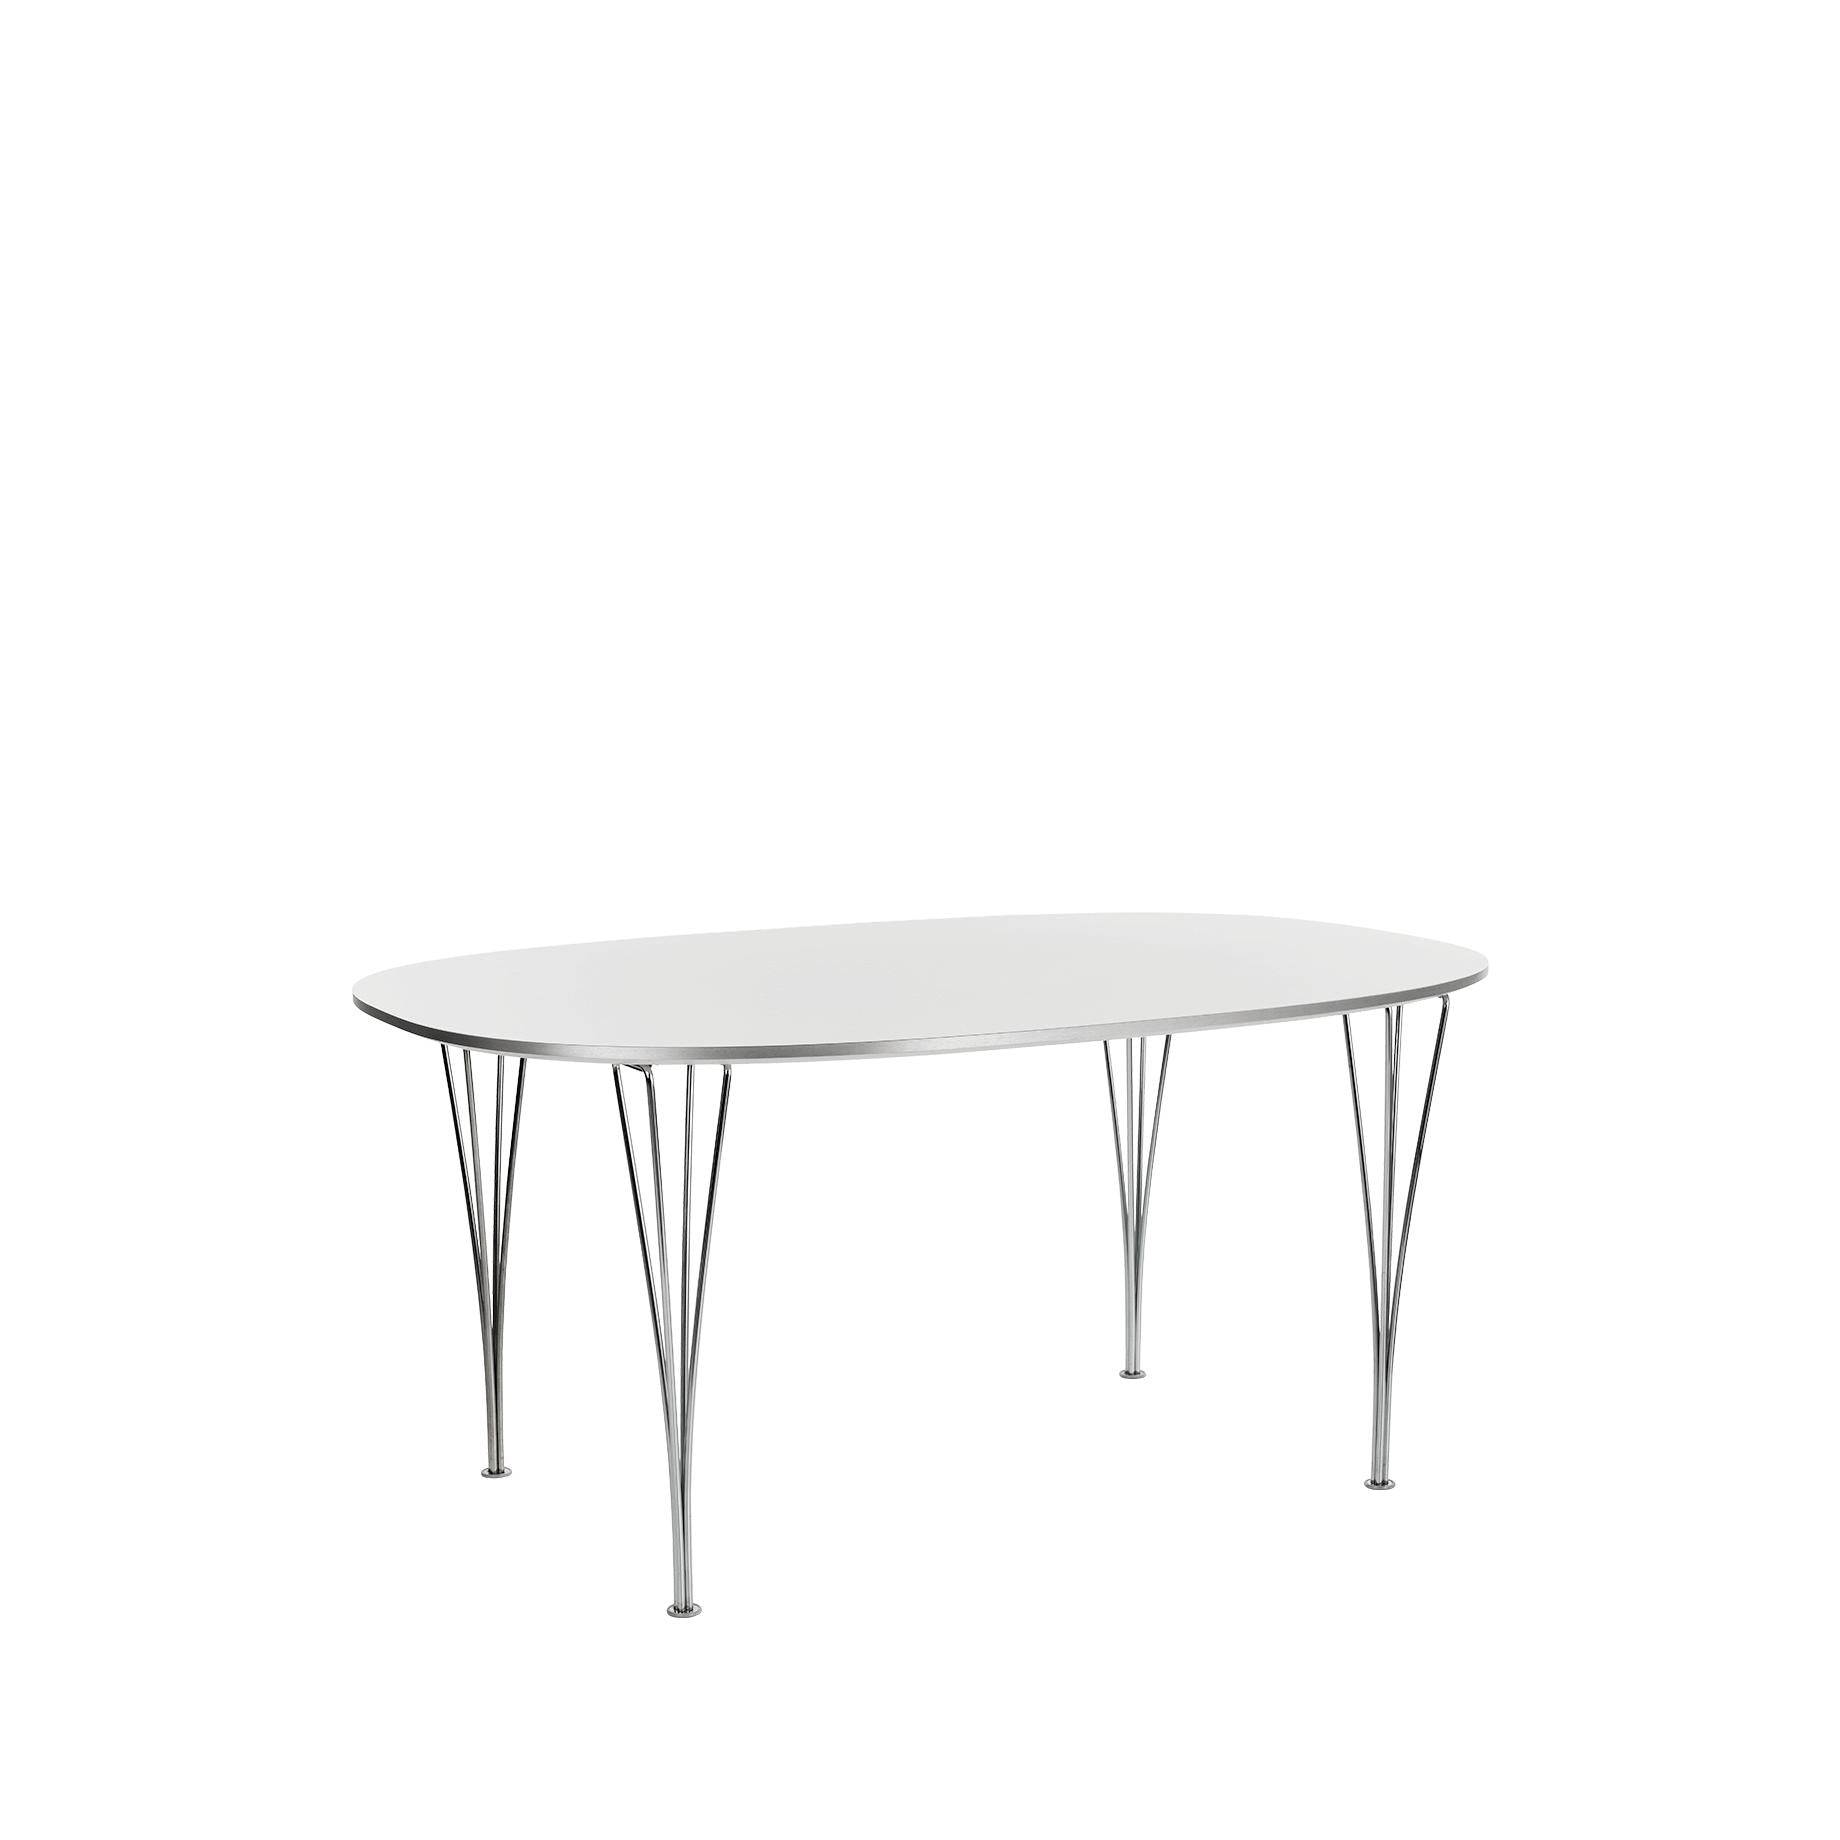 Fritz Hansen Super Elips Table Chrome 100 x150 cm, biały laminat